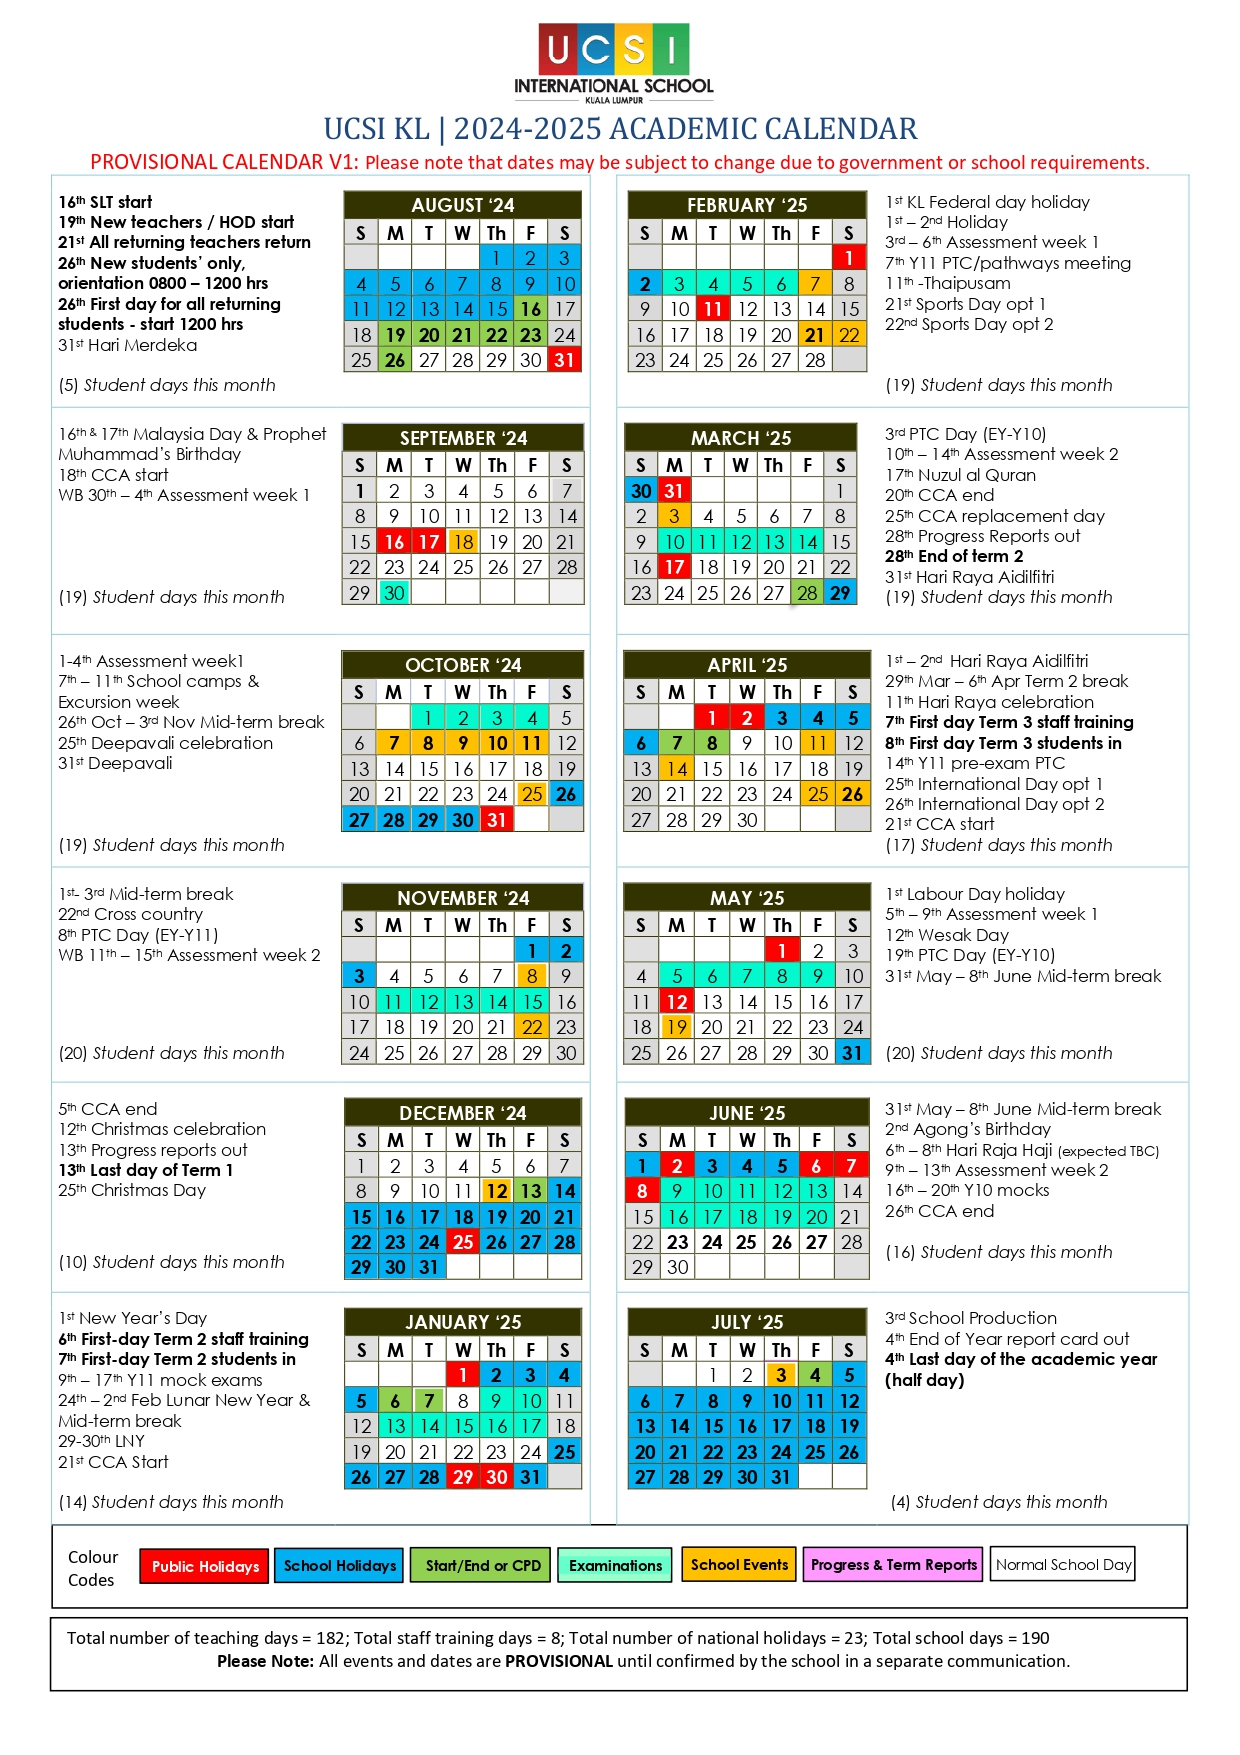 Academic Calendar - UCSI International School Kuala Lumpur